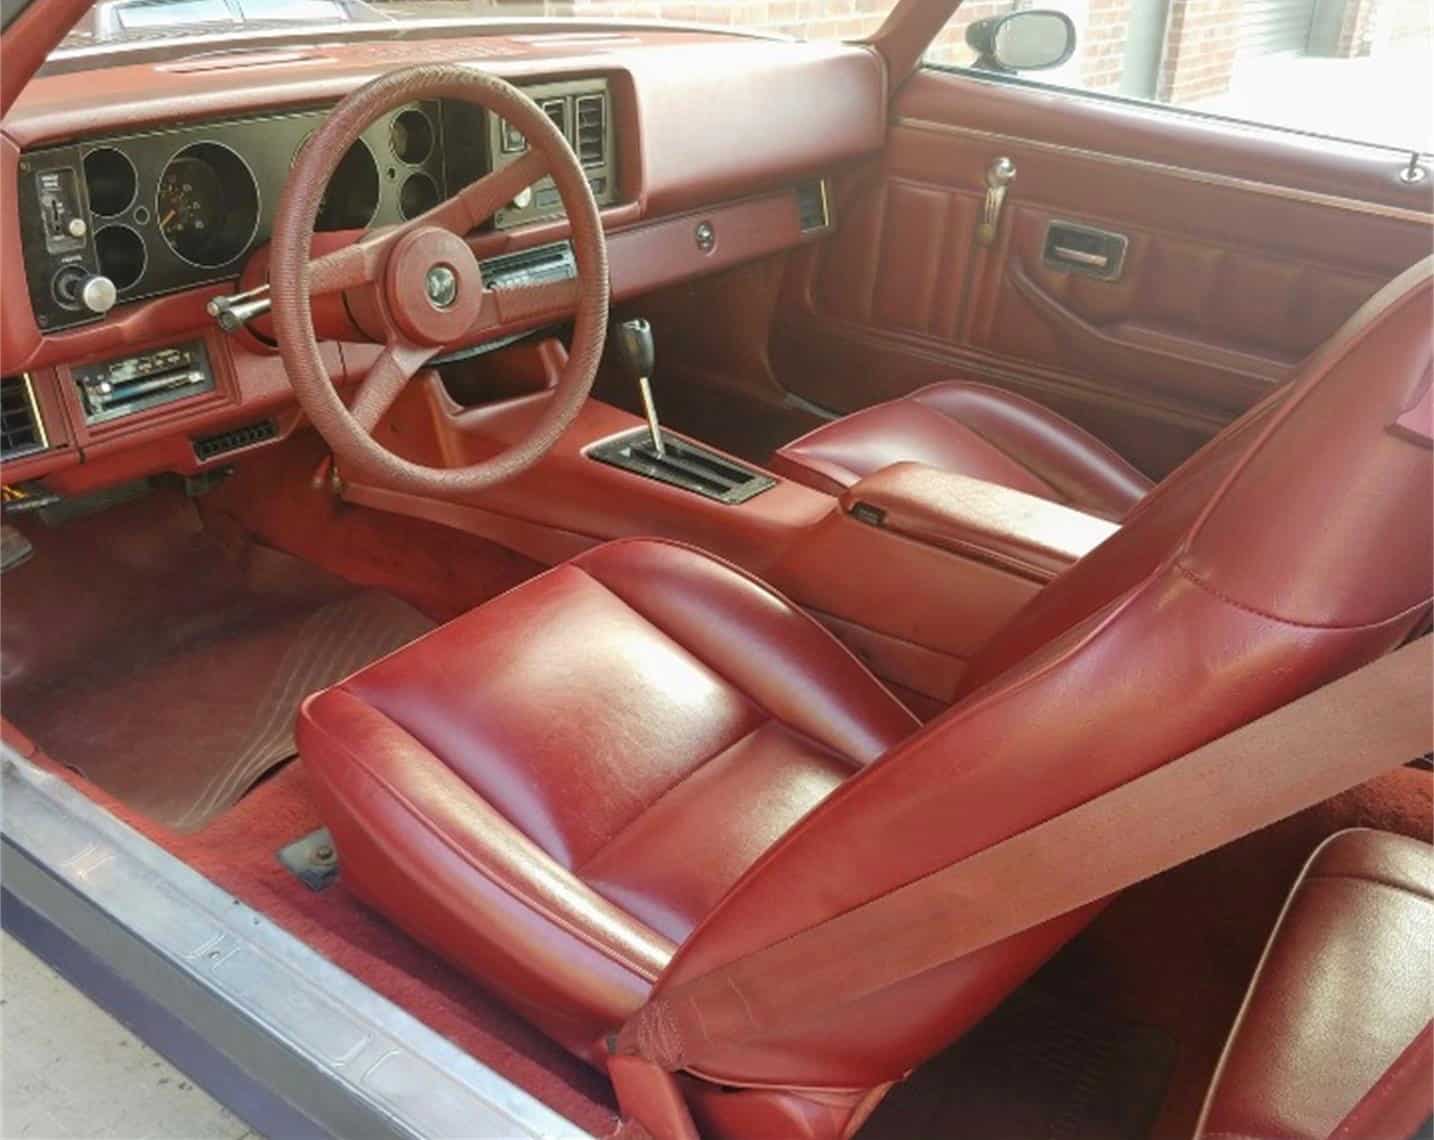 1980 Chevrolet Camaro Z28, Color scheme draws attention to this Camaro, ClassicCars.com Journal